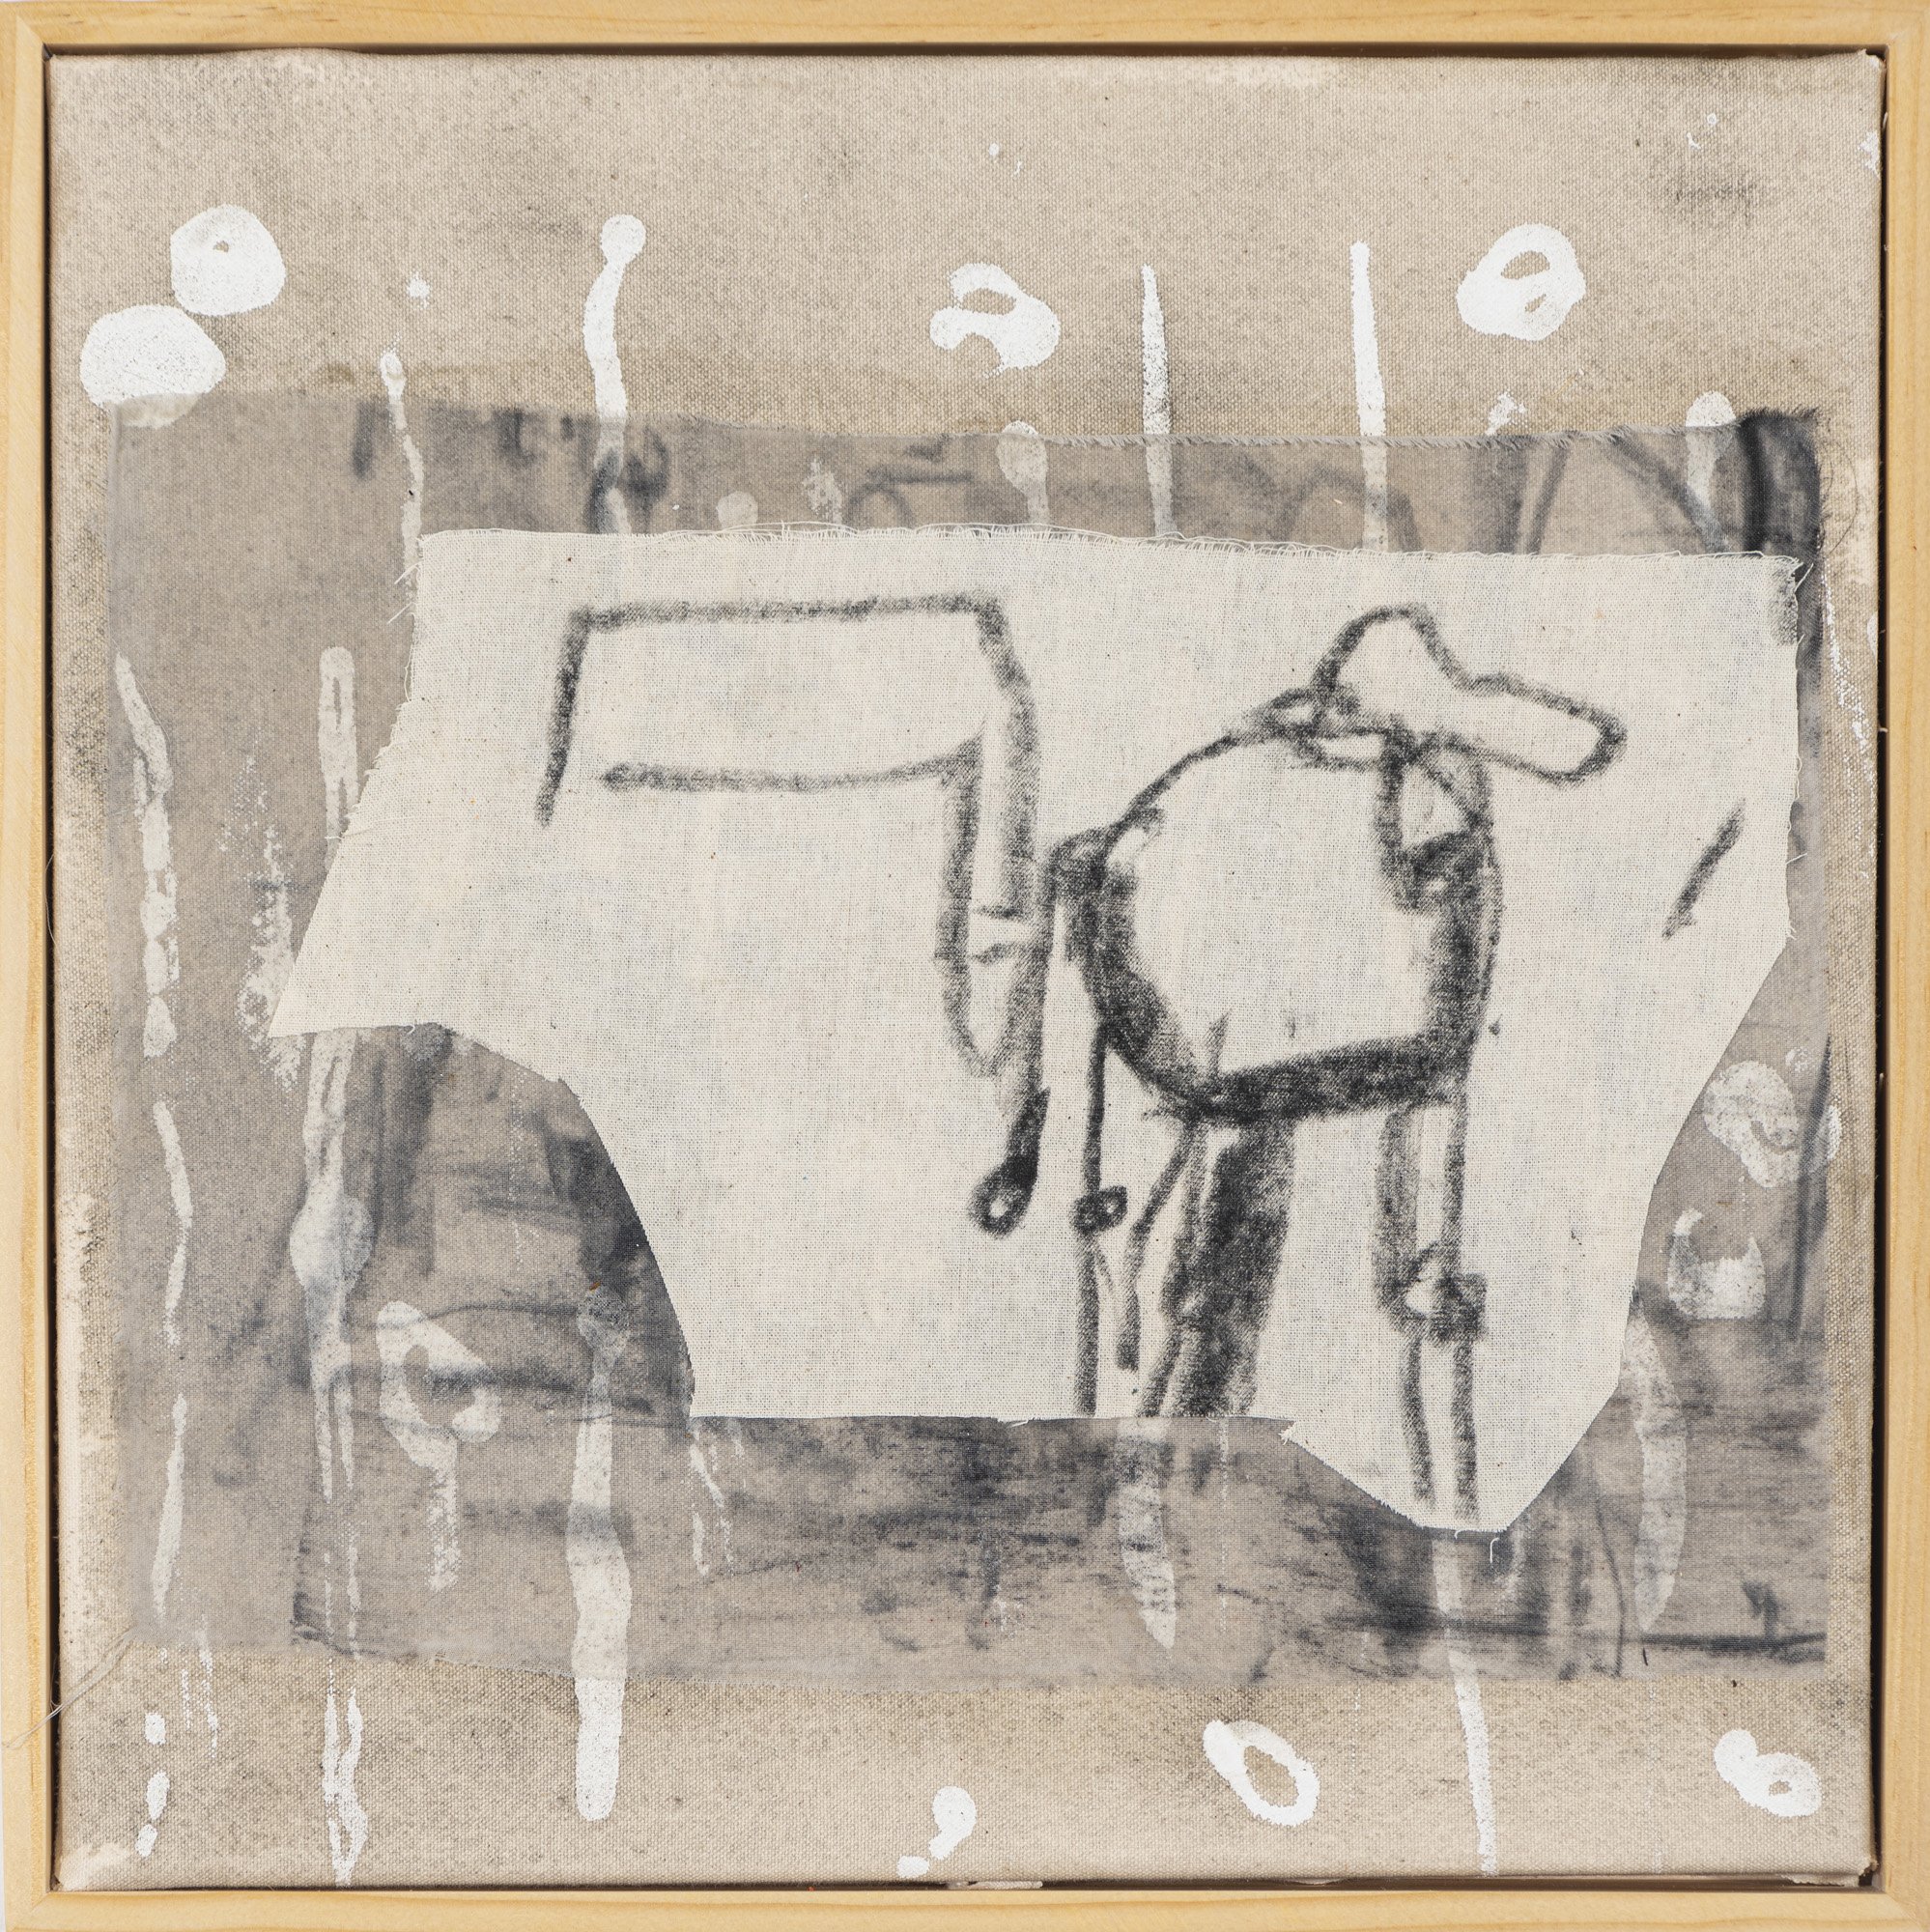 Cow drawing 1_30x30cm.jpg